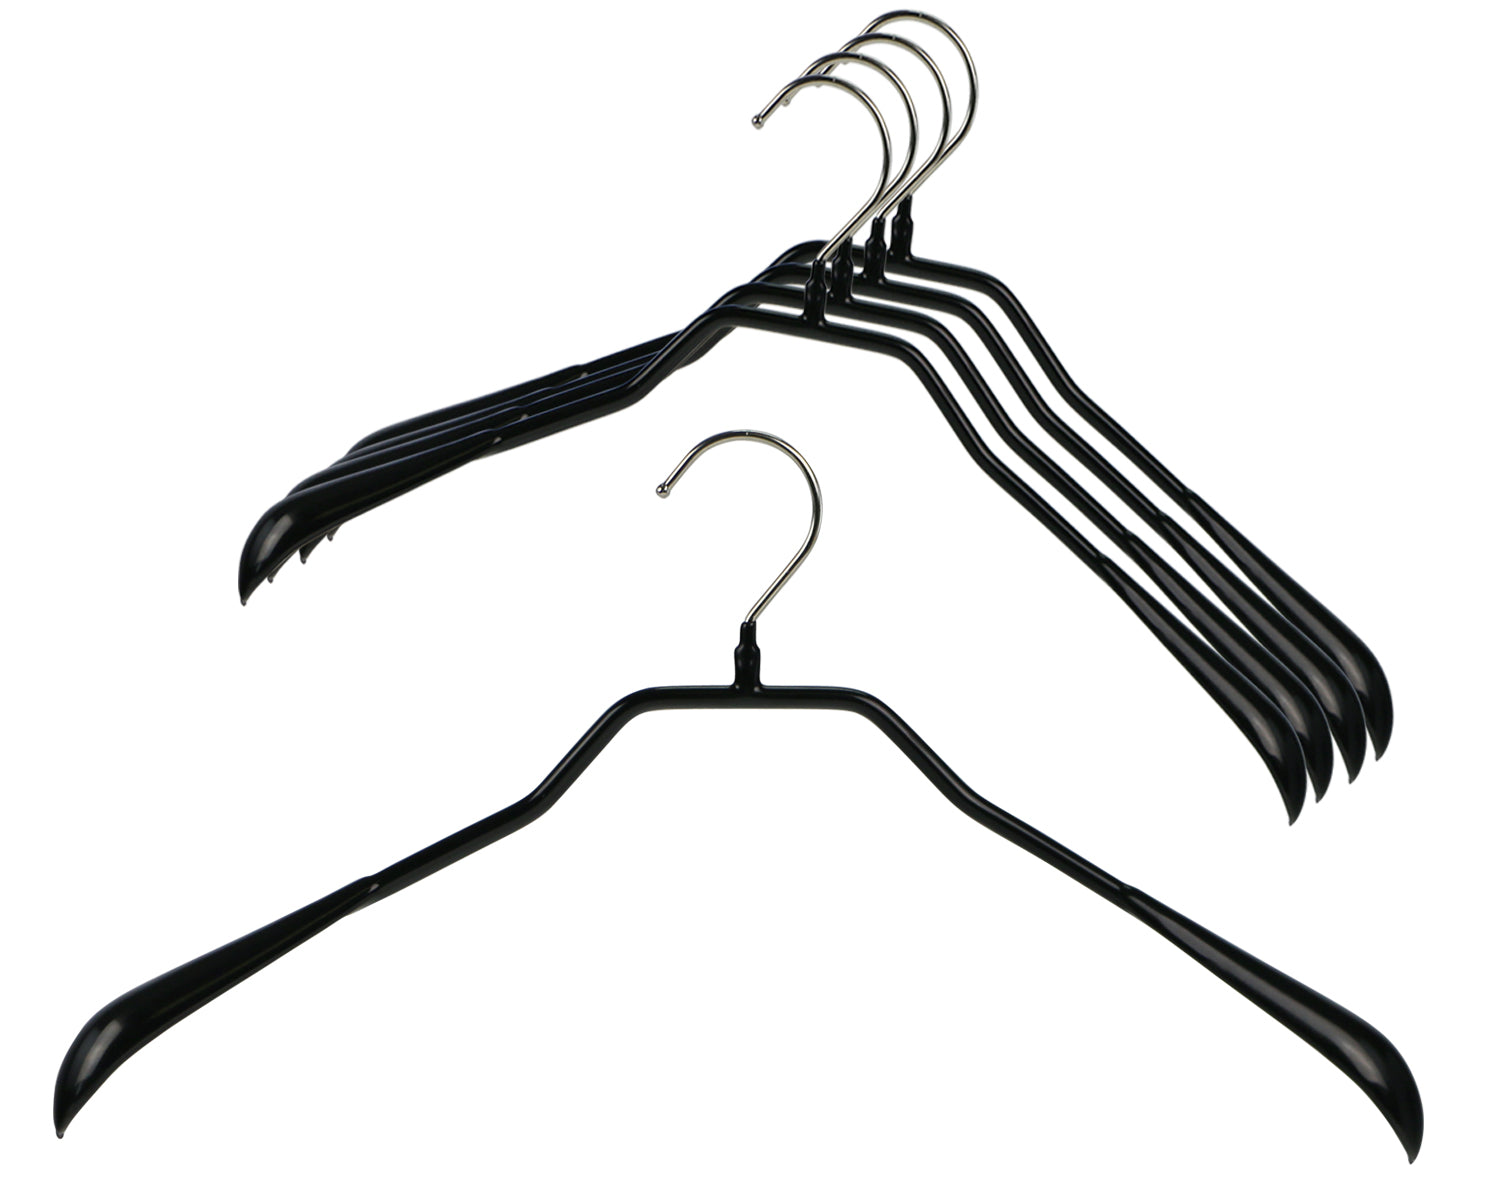 Ventilator Hanger - Wide shoulder- Shape Preserving- Heavy-Duty Garment  Hanger